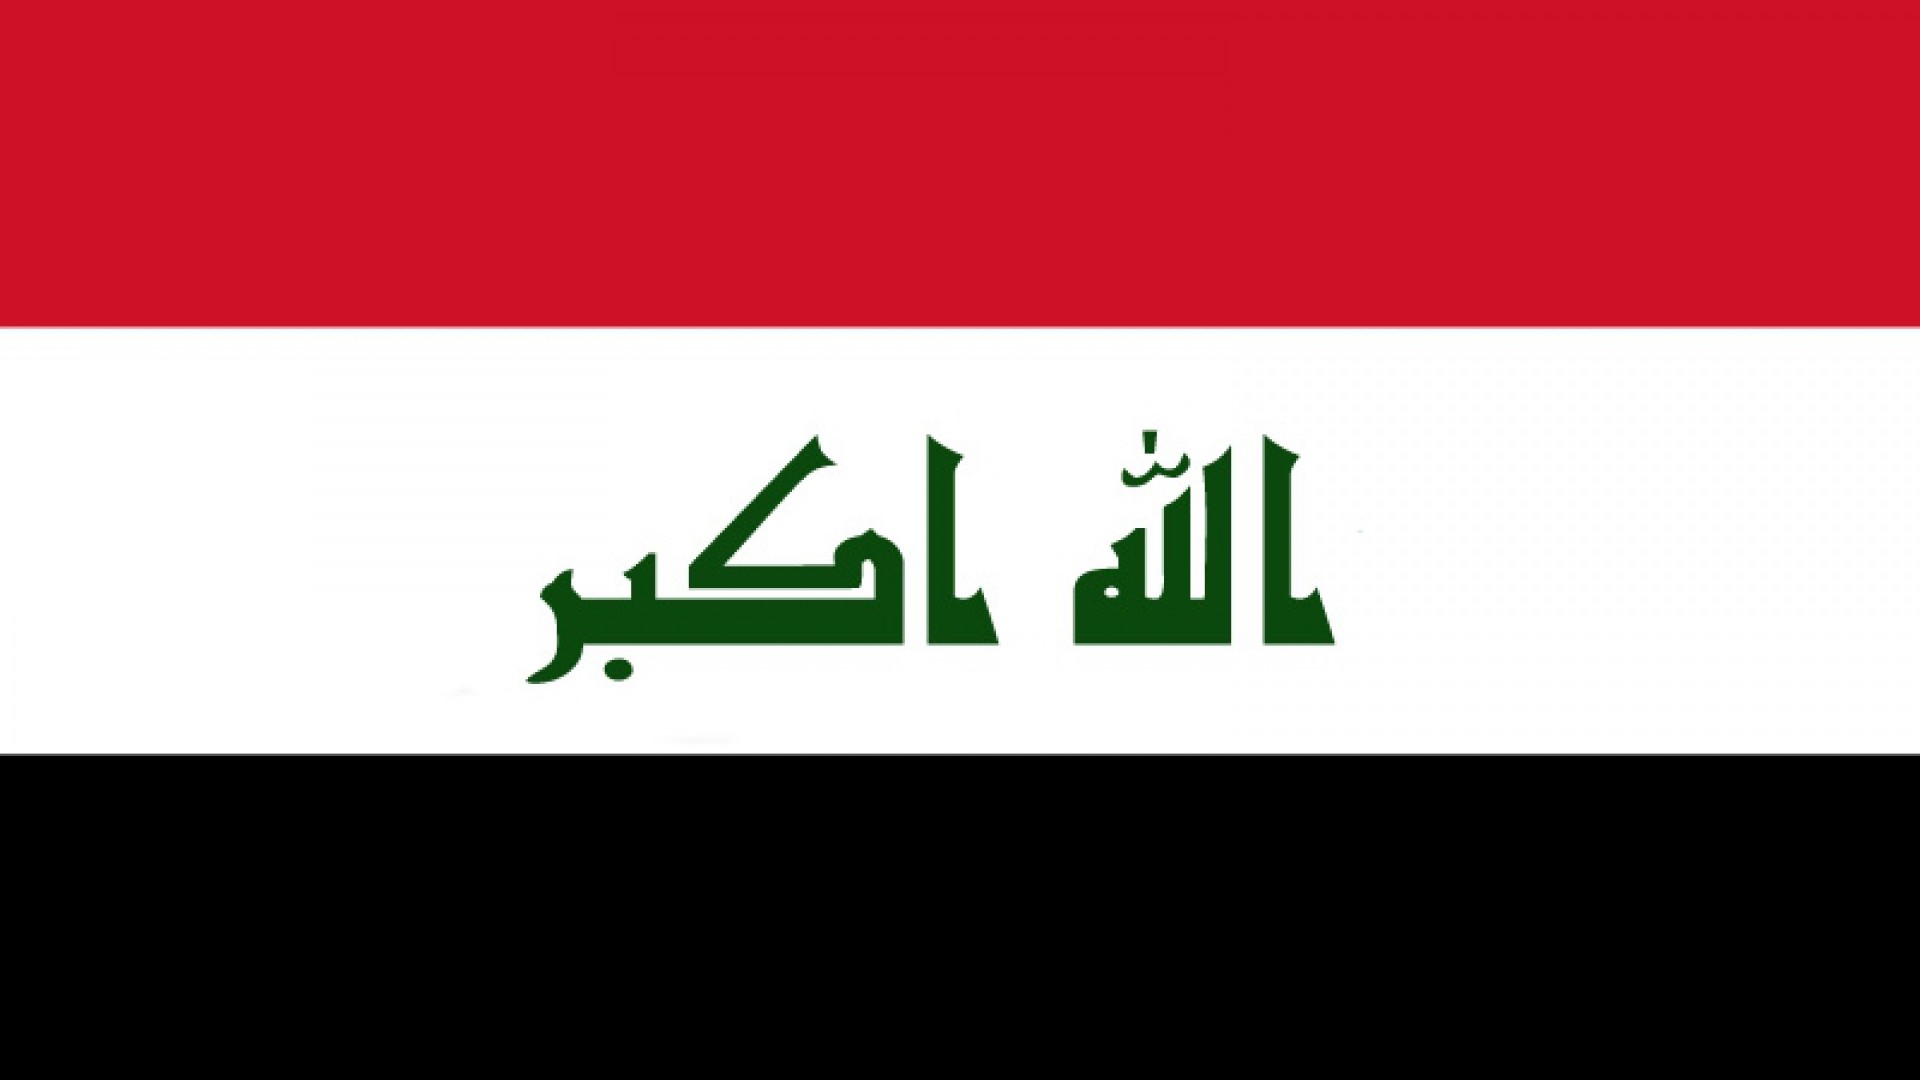 Iraq Flag Wallpaper High Definition Quality Widescreen